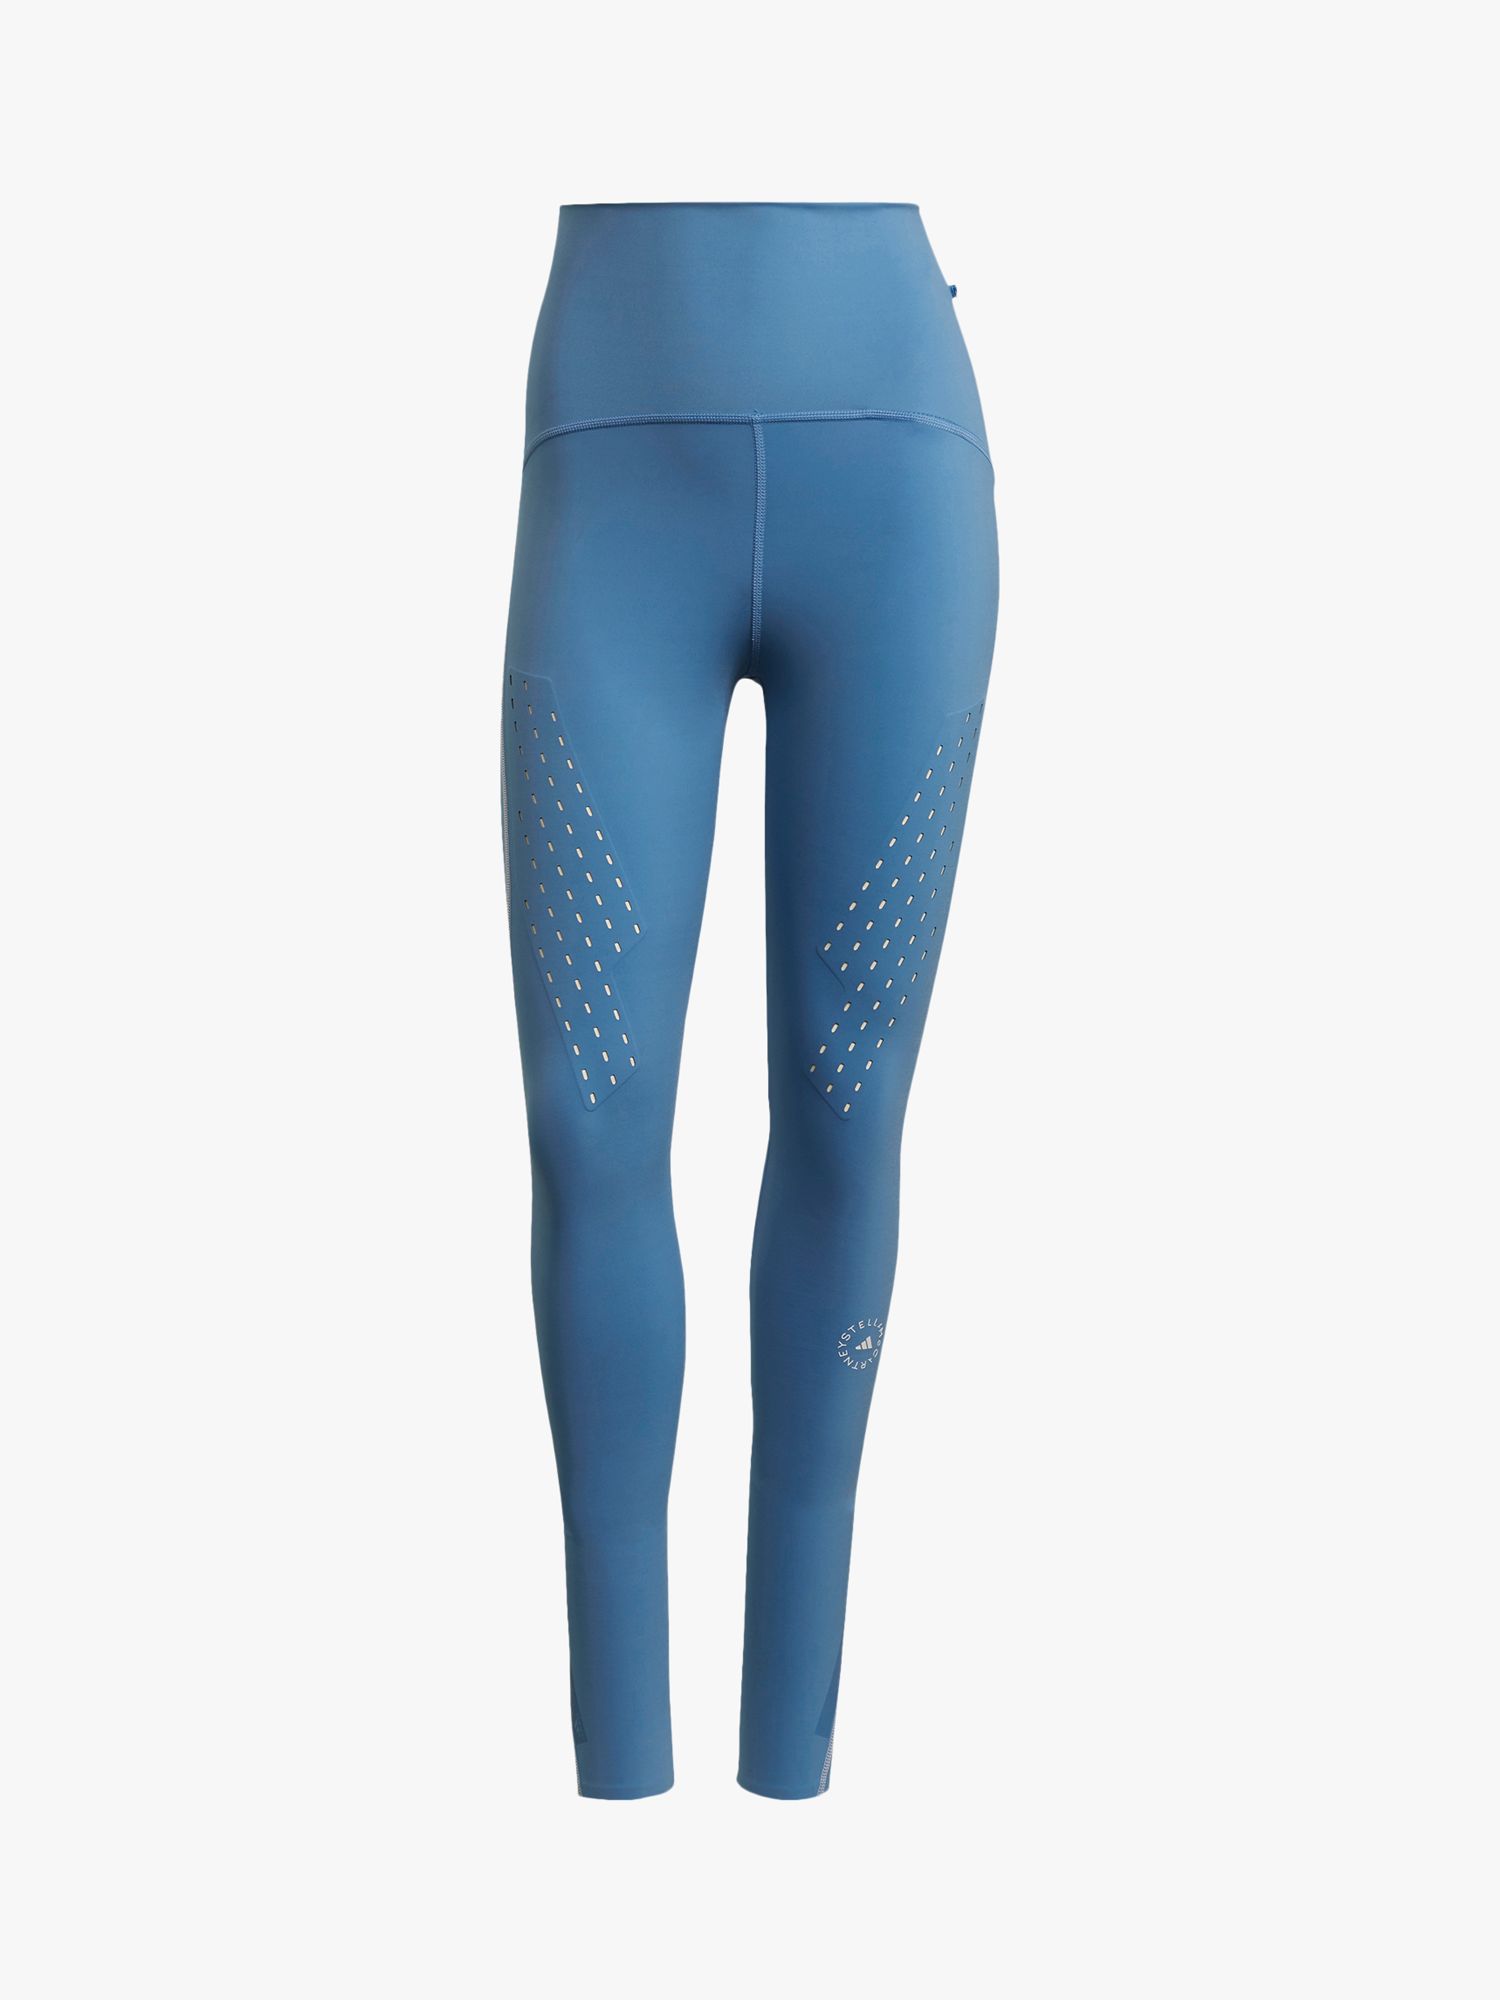 Adidas By Stella McCartney TRUEPURPOSE LASER-CUT Training Tights. Color:  Blue